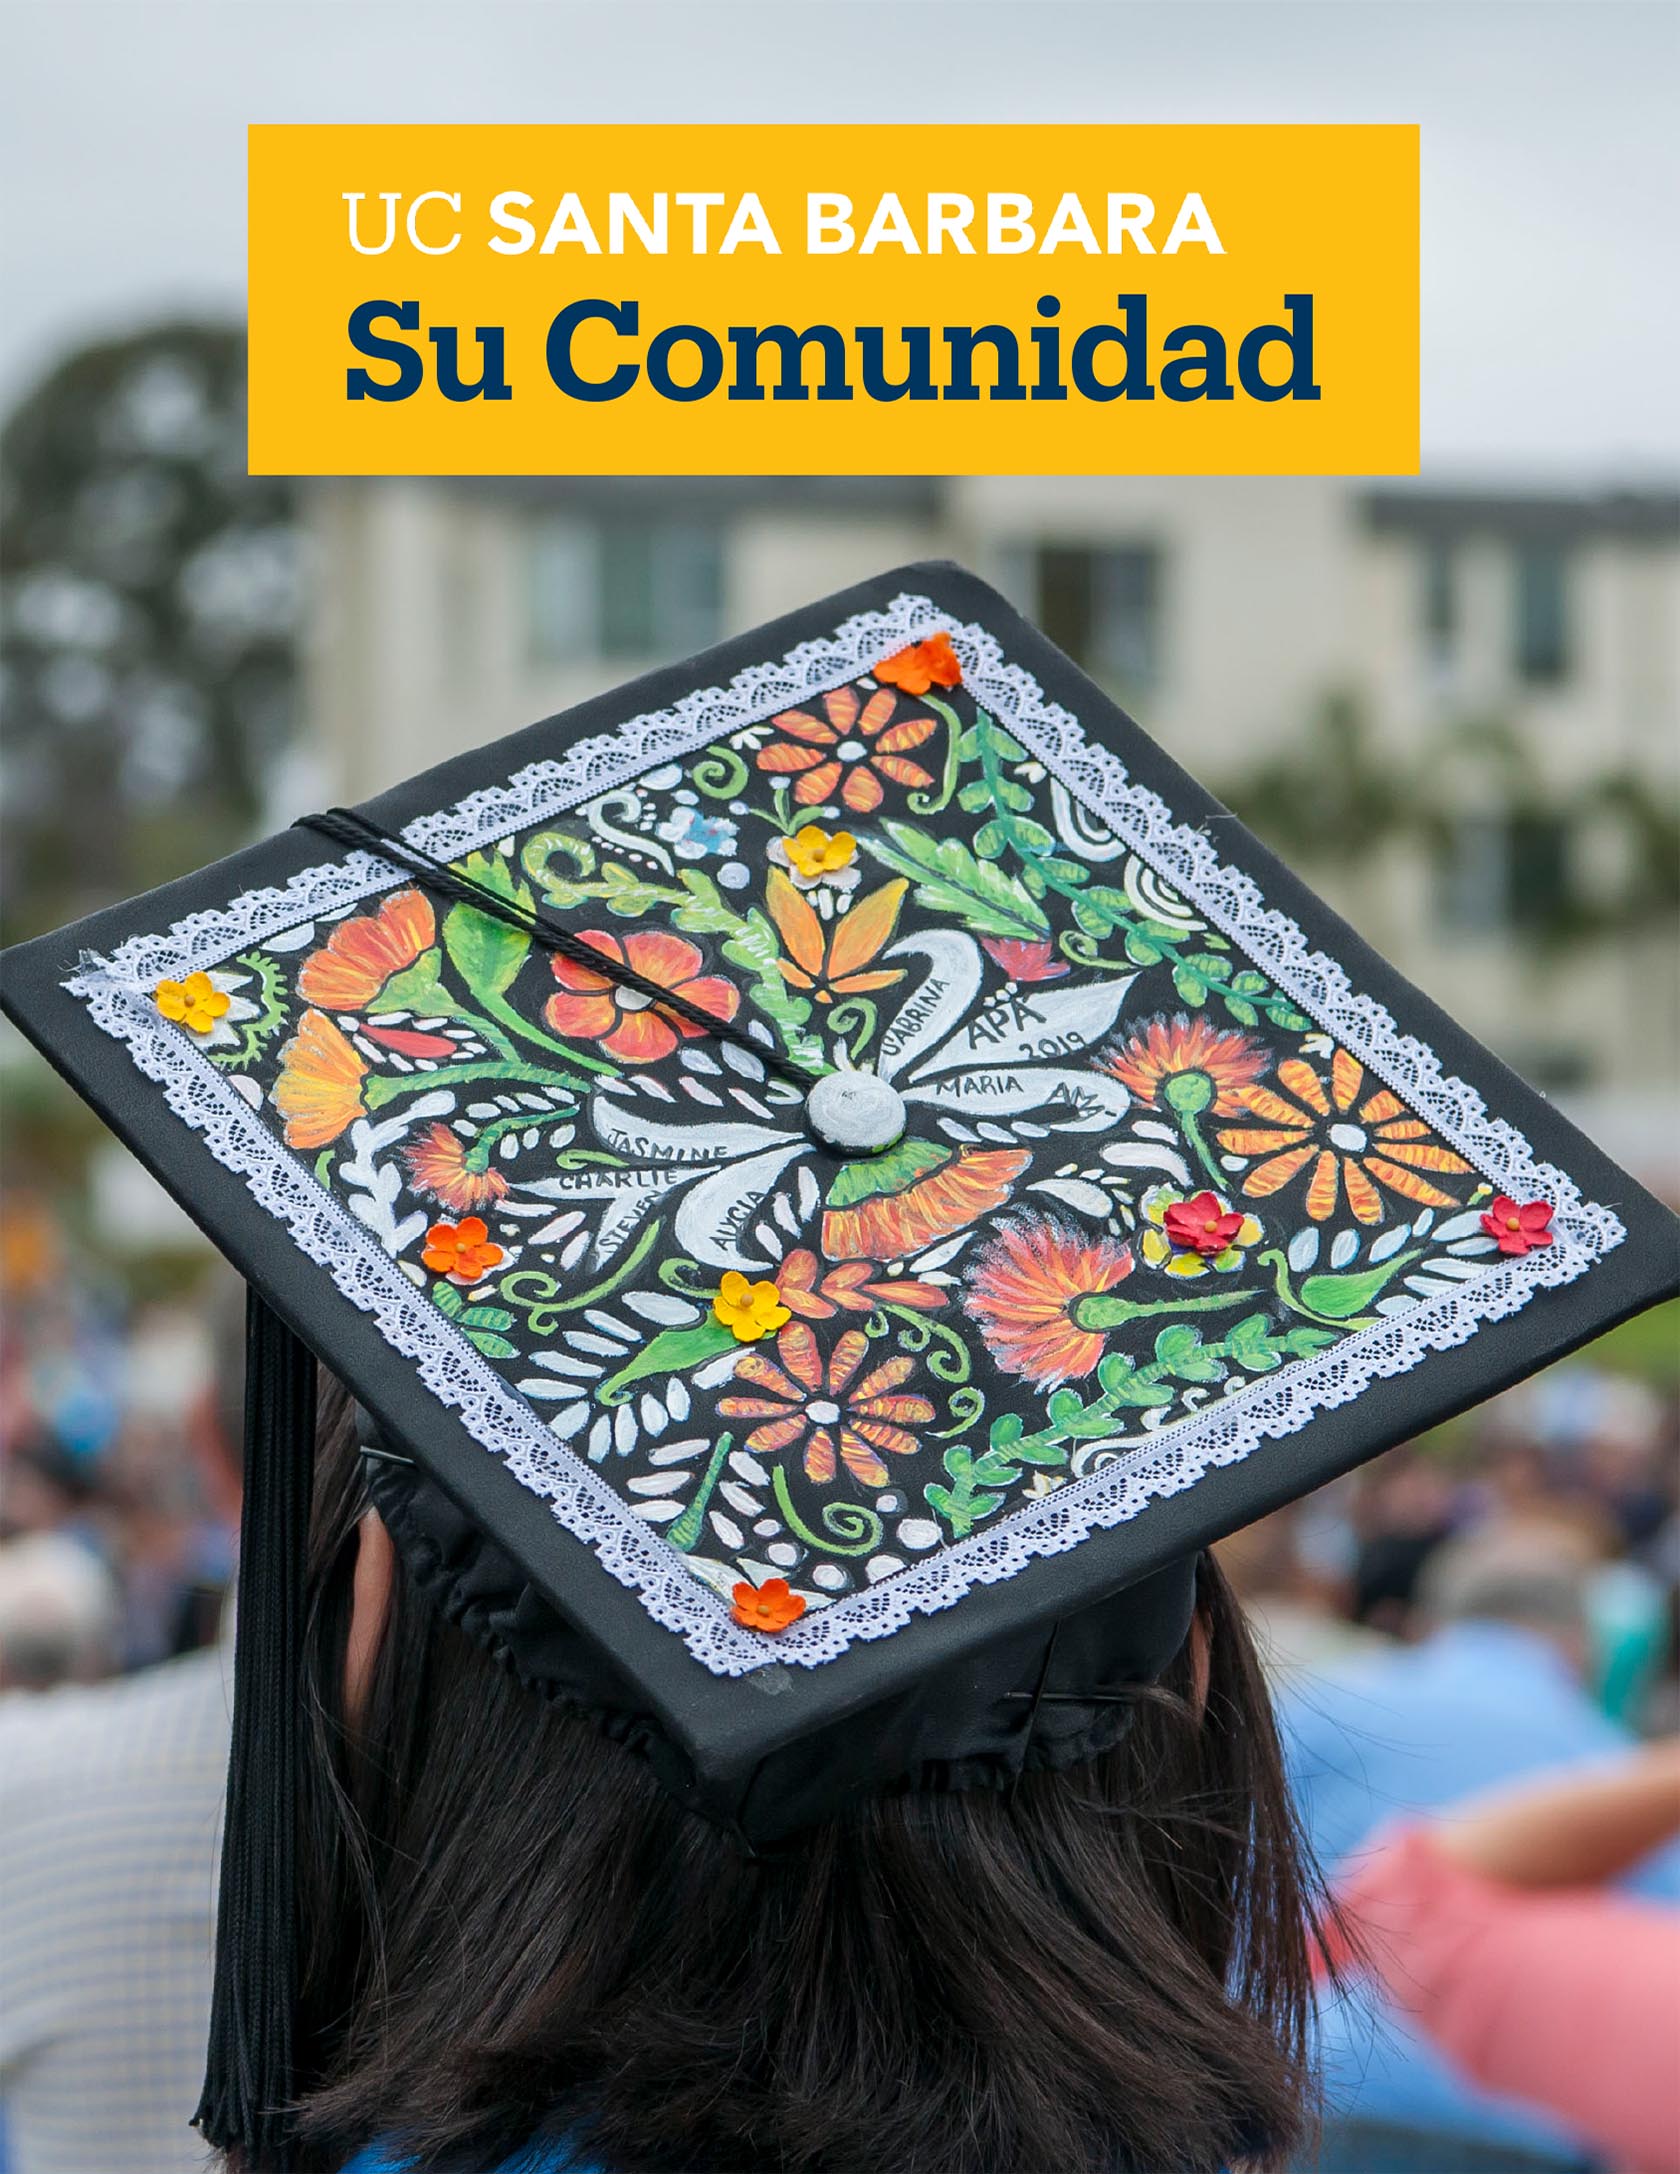 This is the Su Comunidad cover